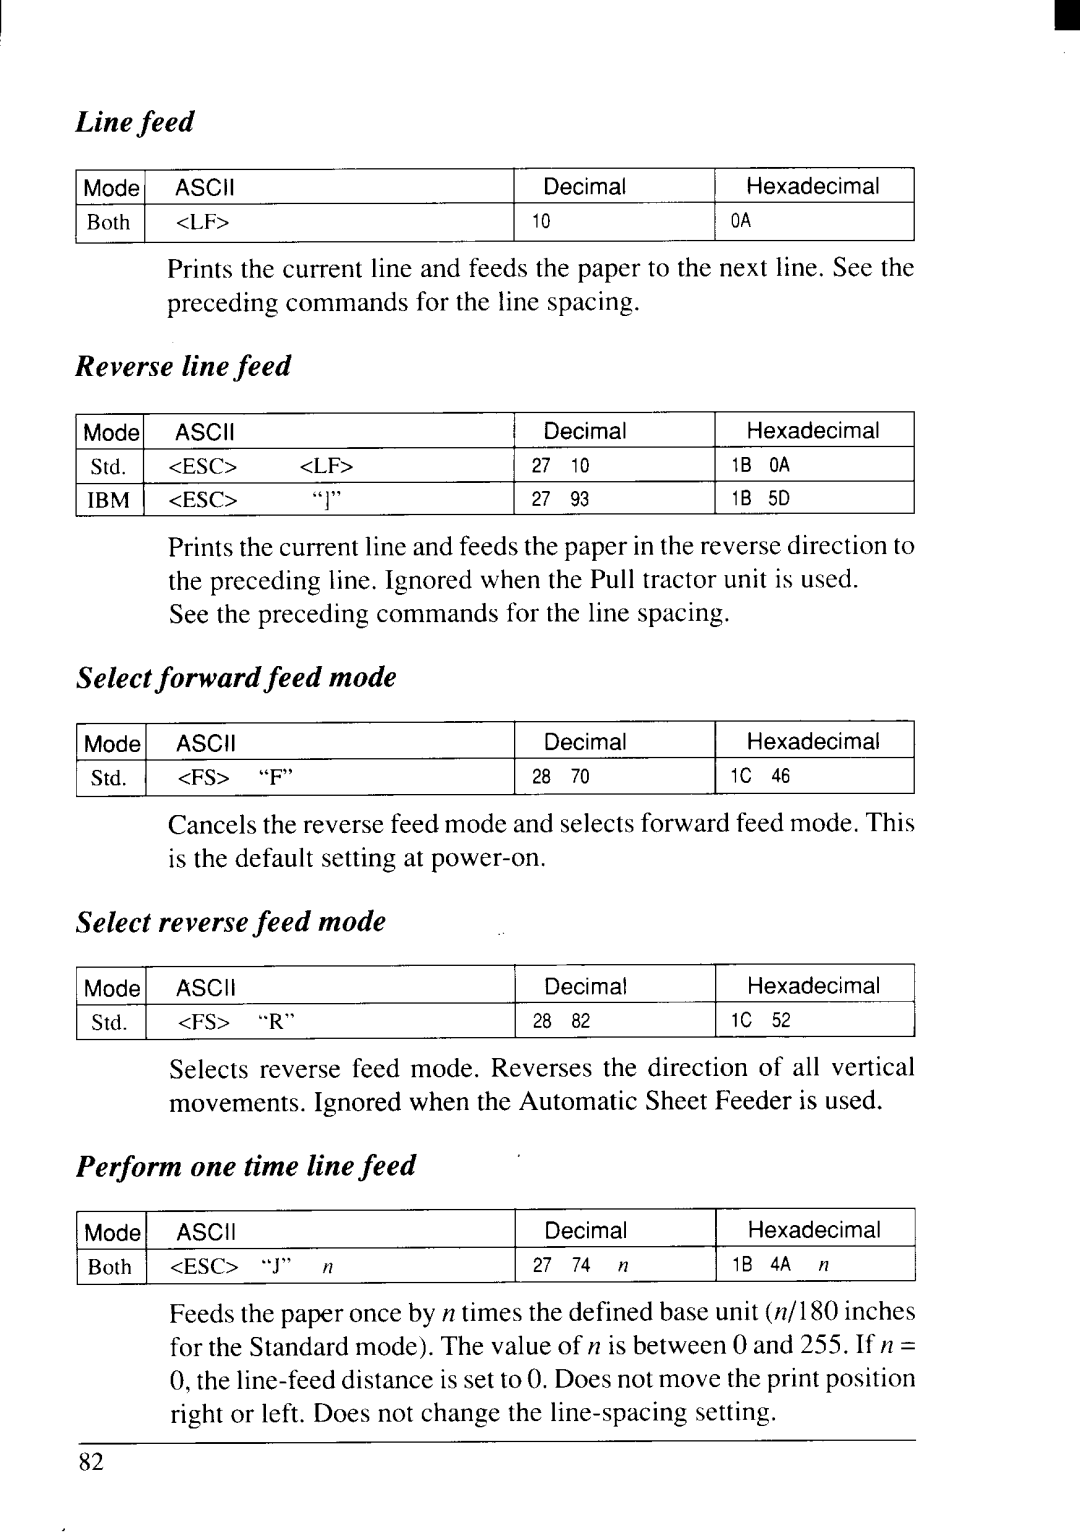 Star Micronics NX-2415II user manual Line feed, Reverse line feed, Select forwardfeed mode, Select reverse feed mode 